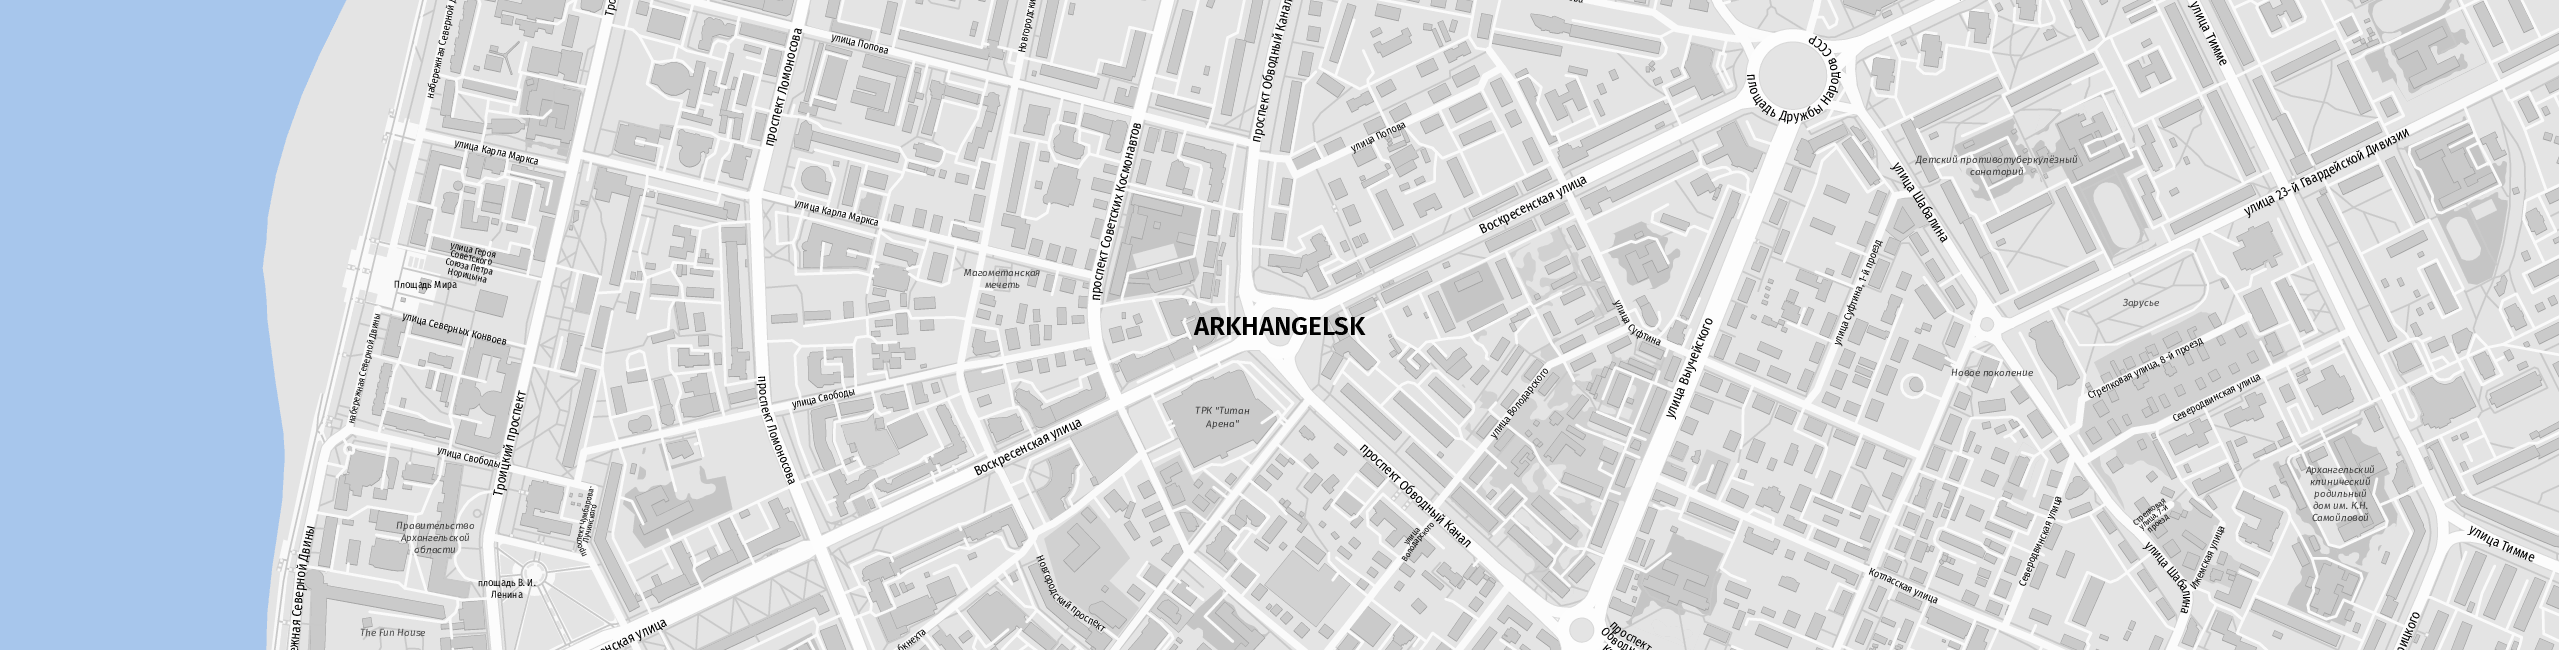 Stadtplan Archangelsk zum Downloaden.